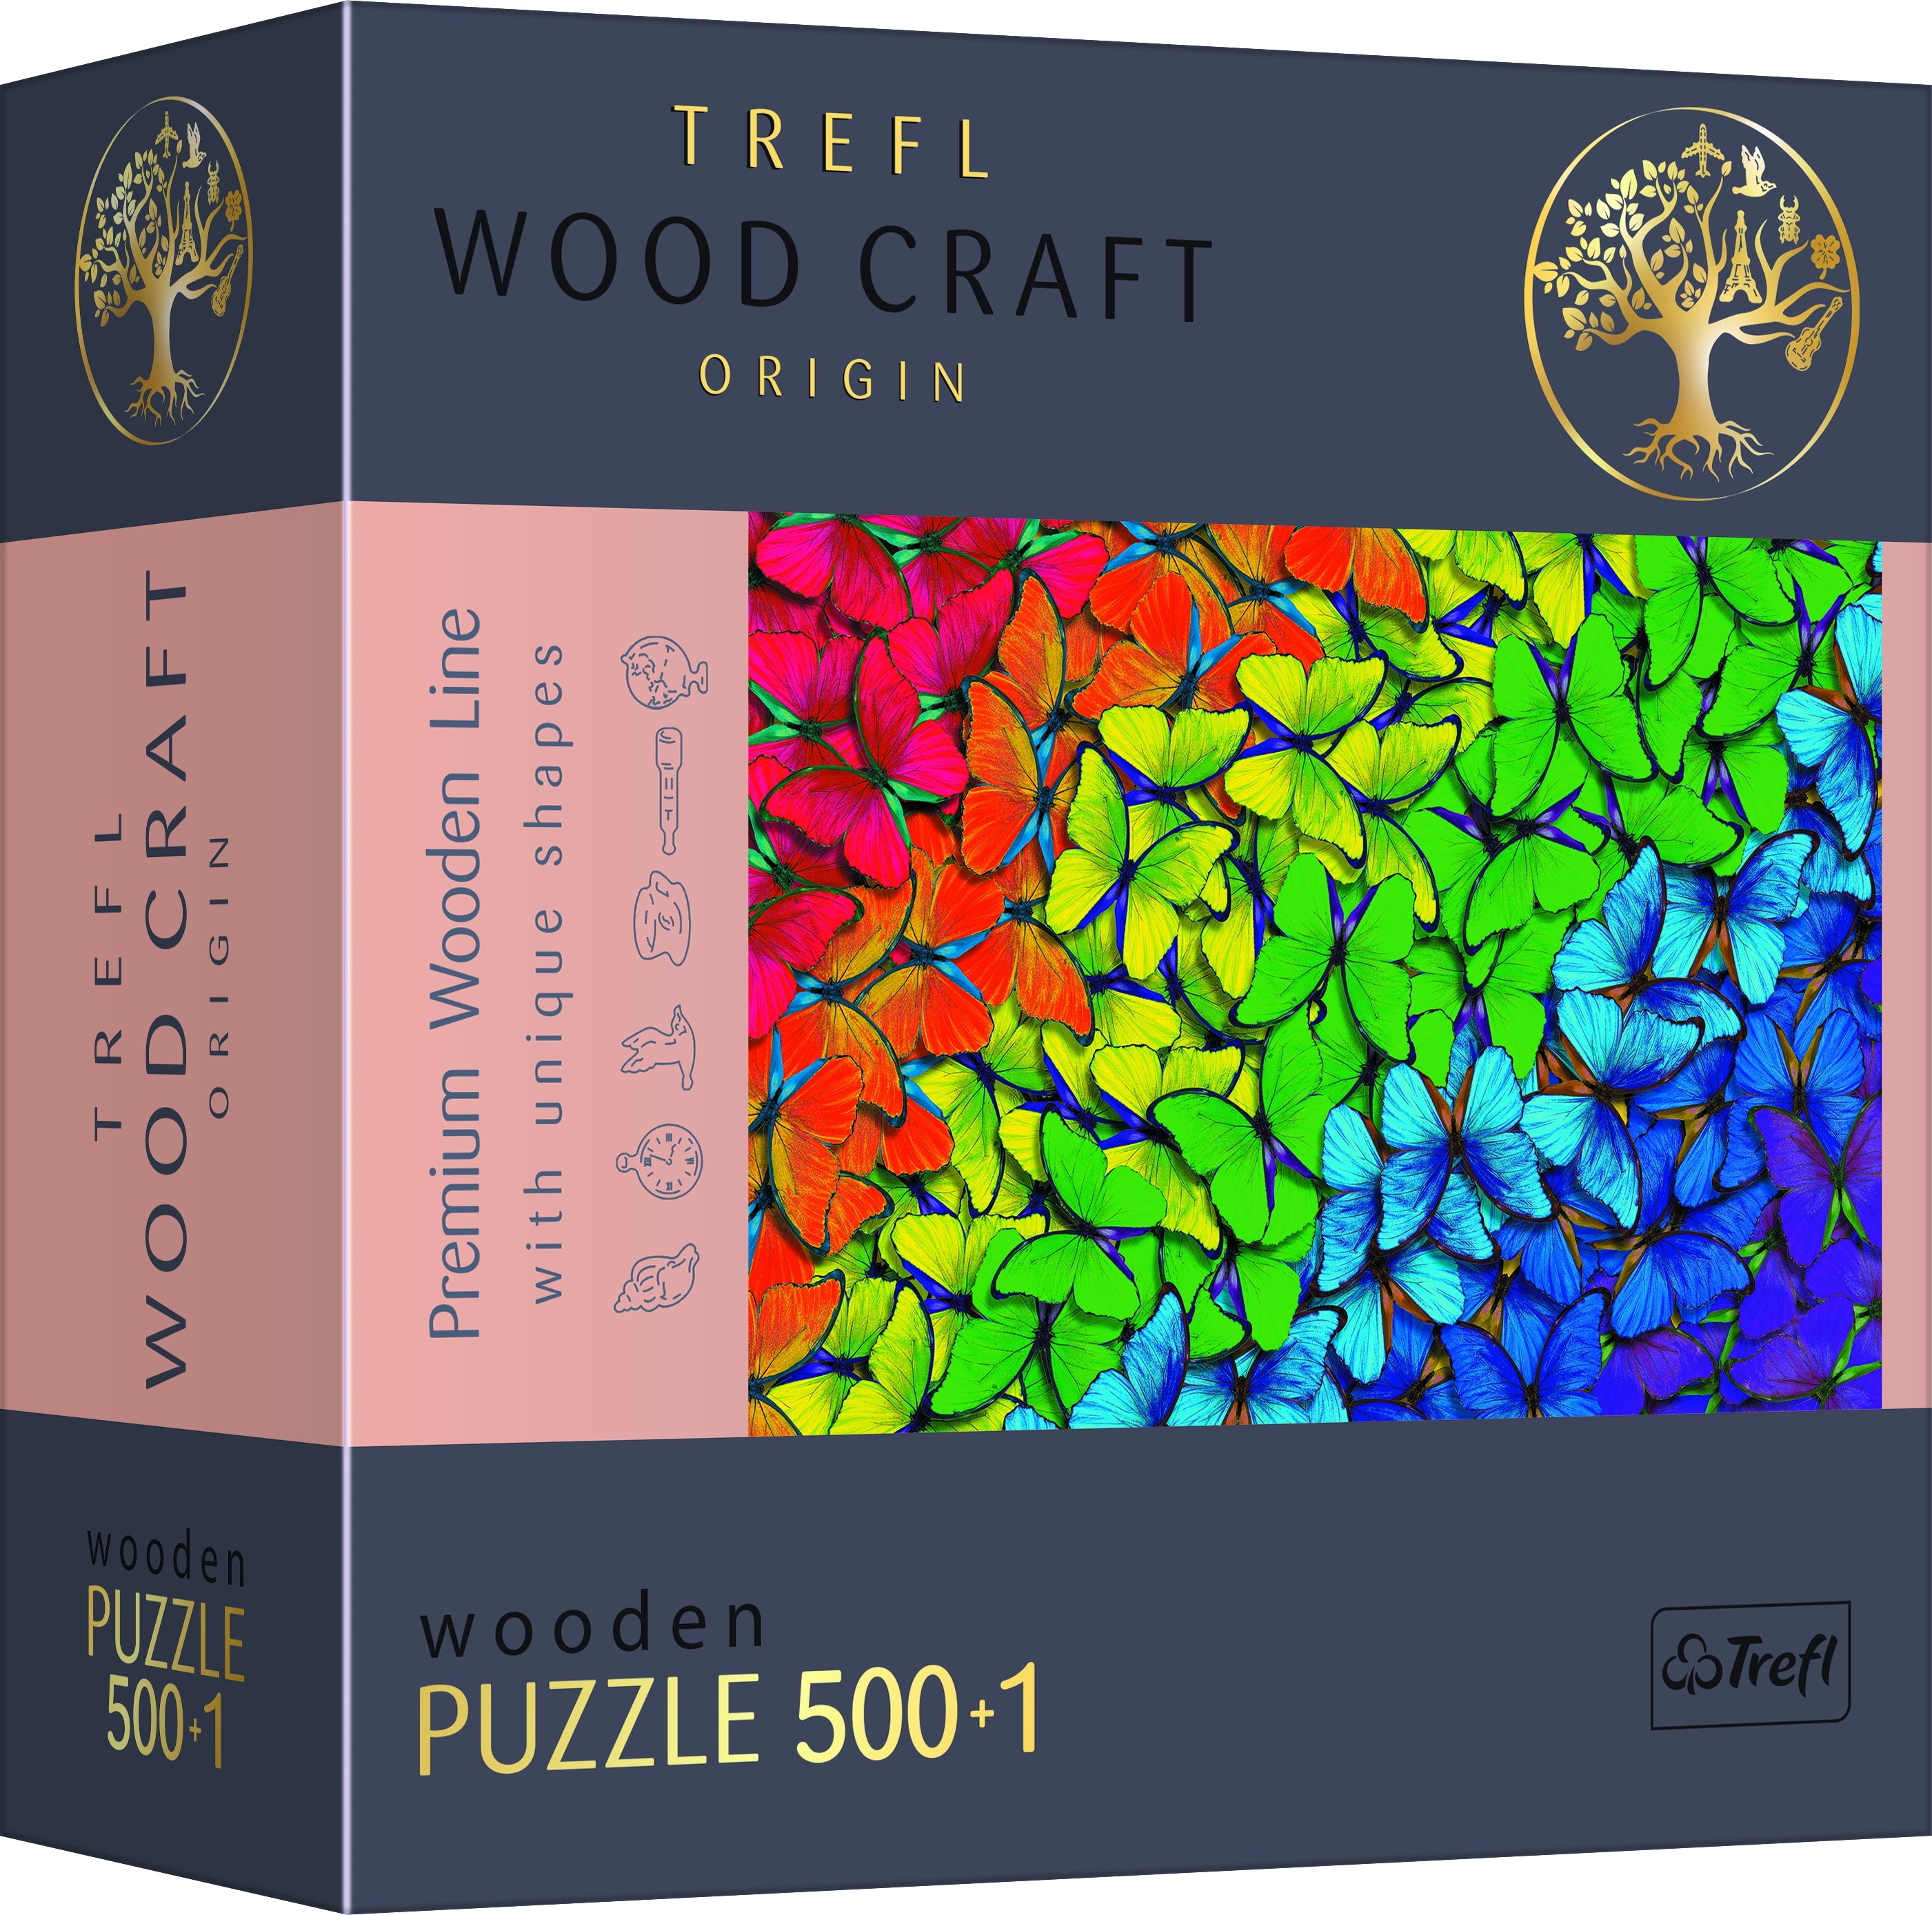 Trefl Wood Craft 501 Piece Wooden Puzzle - Rainbow Butterflies